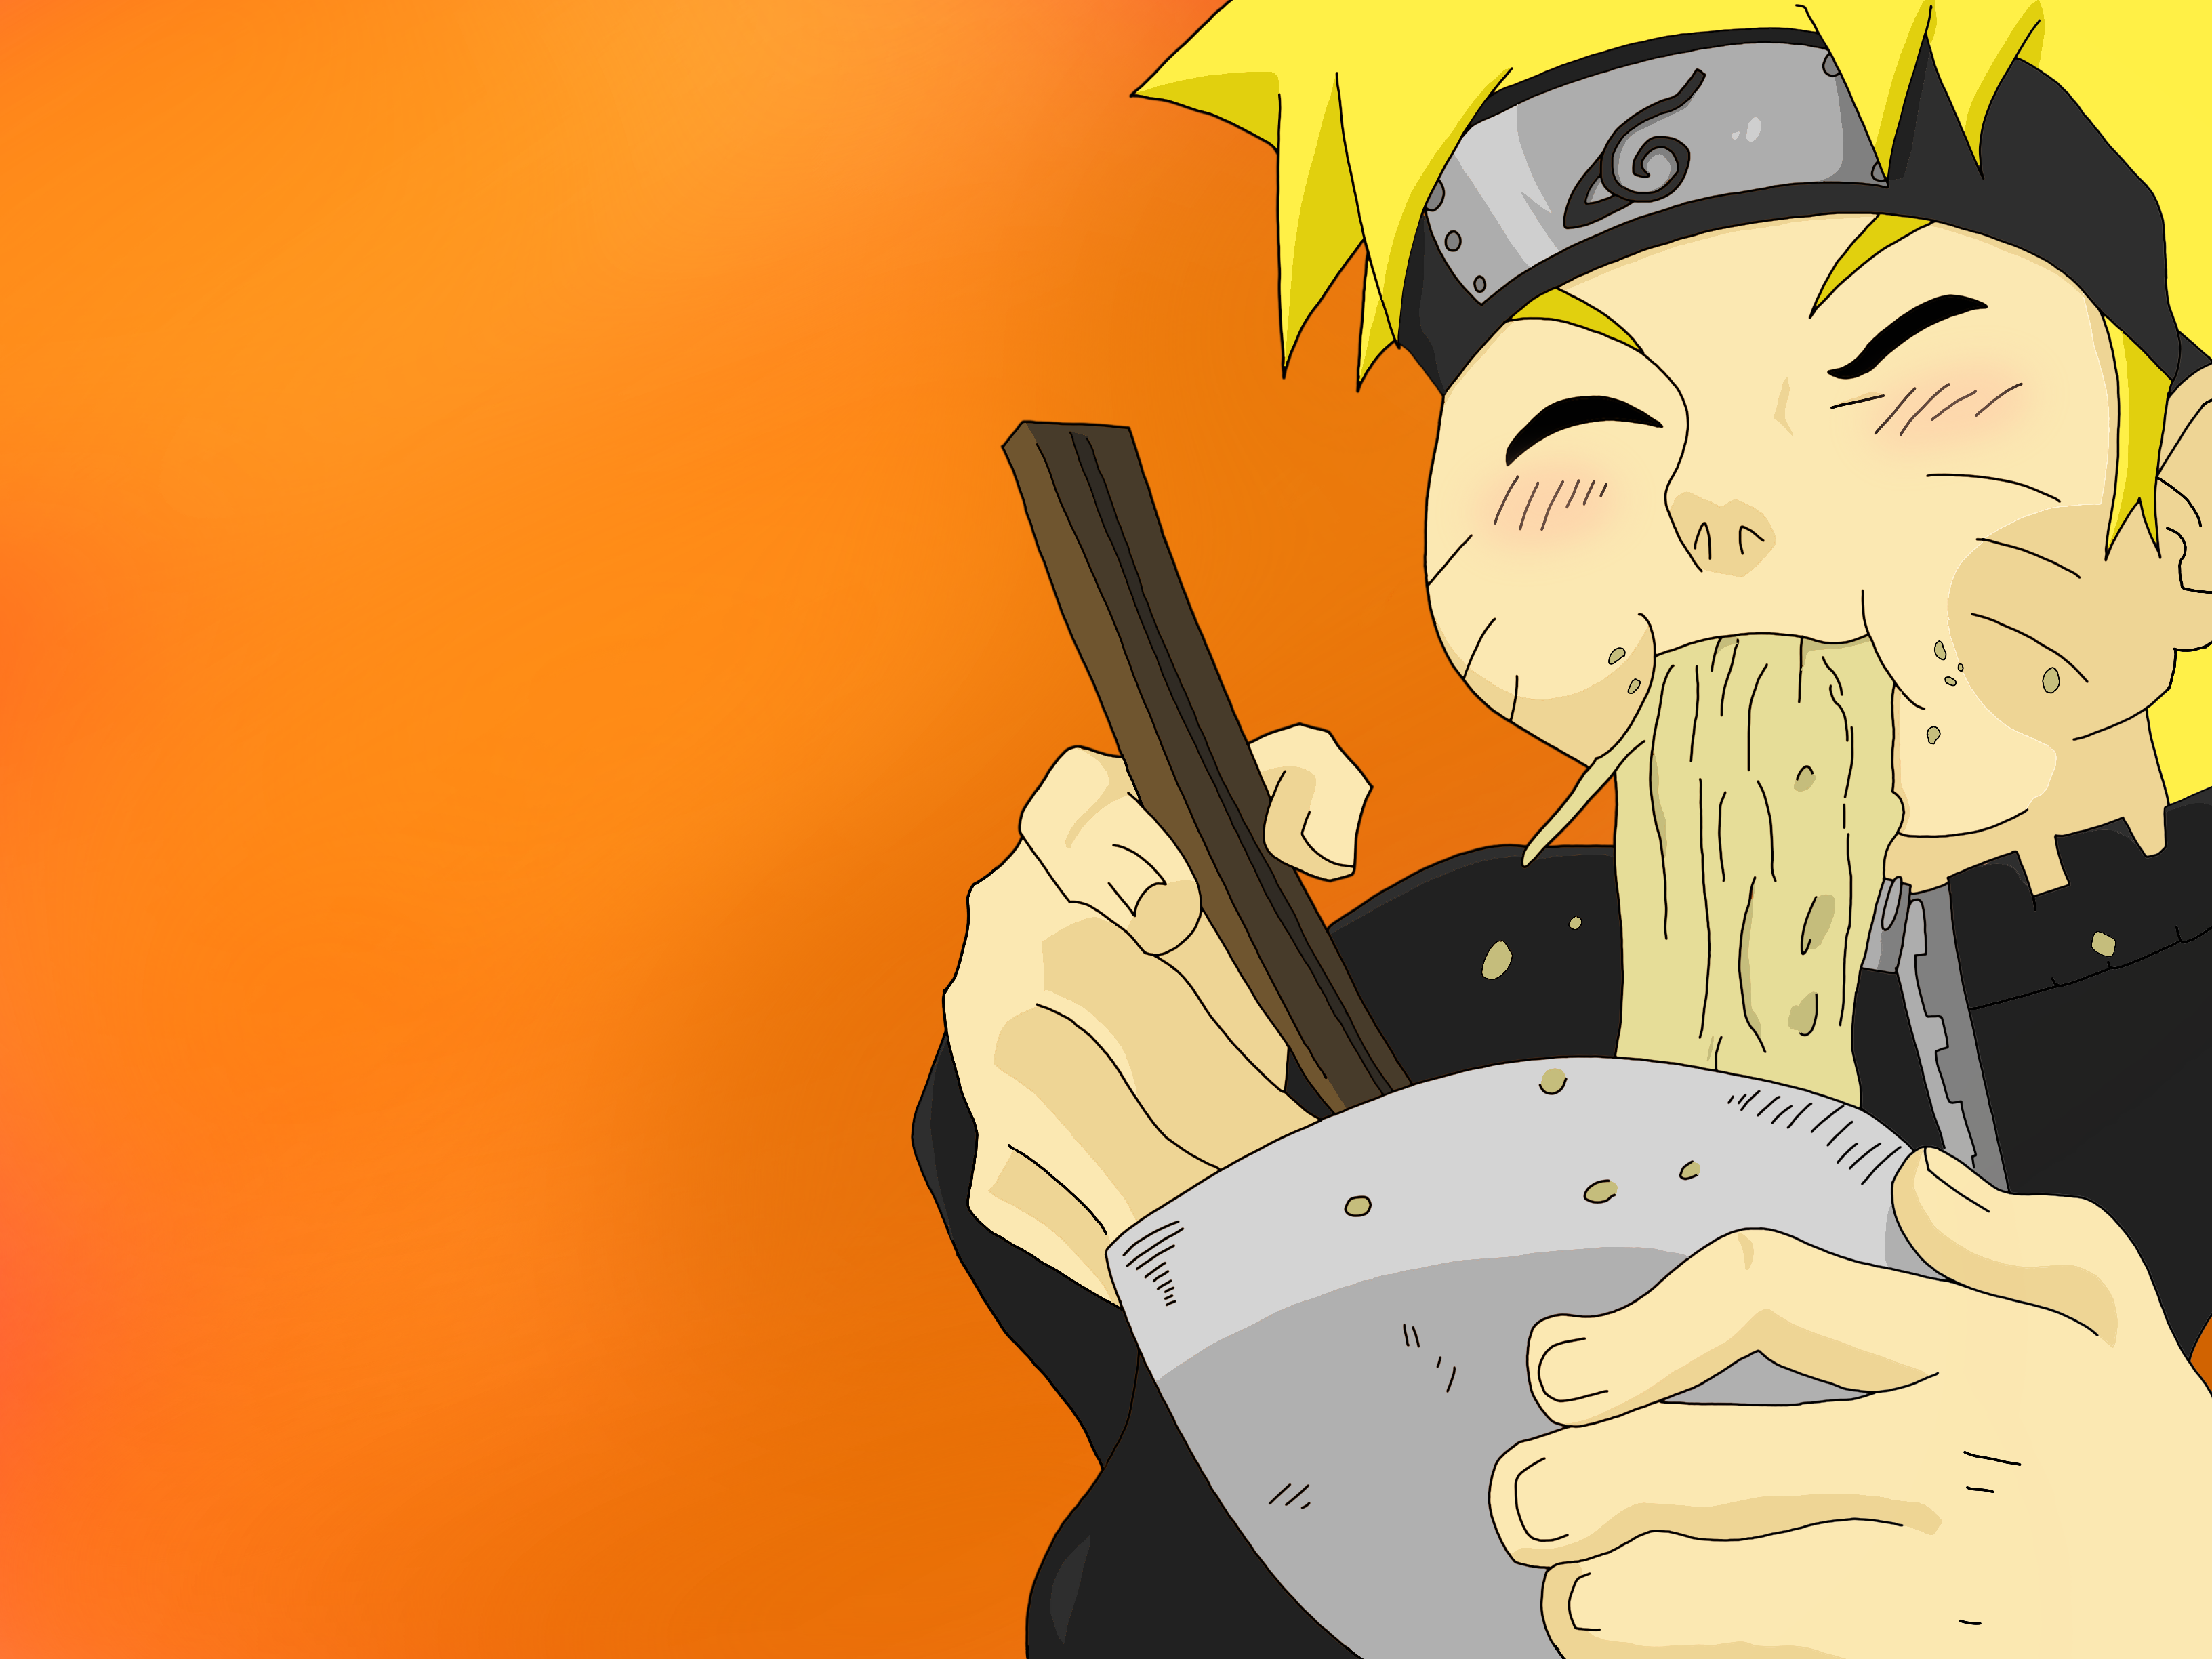 I drew Naruto eating ramen